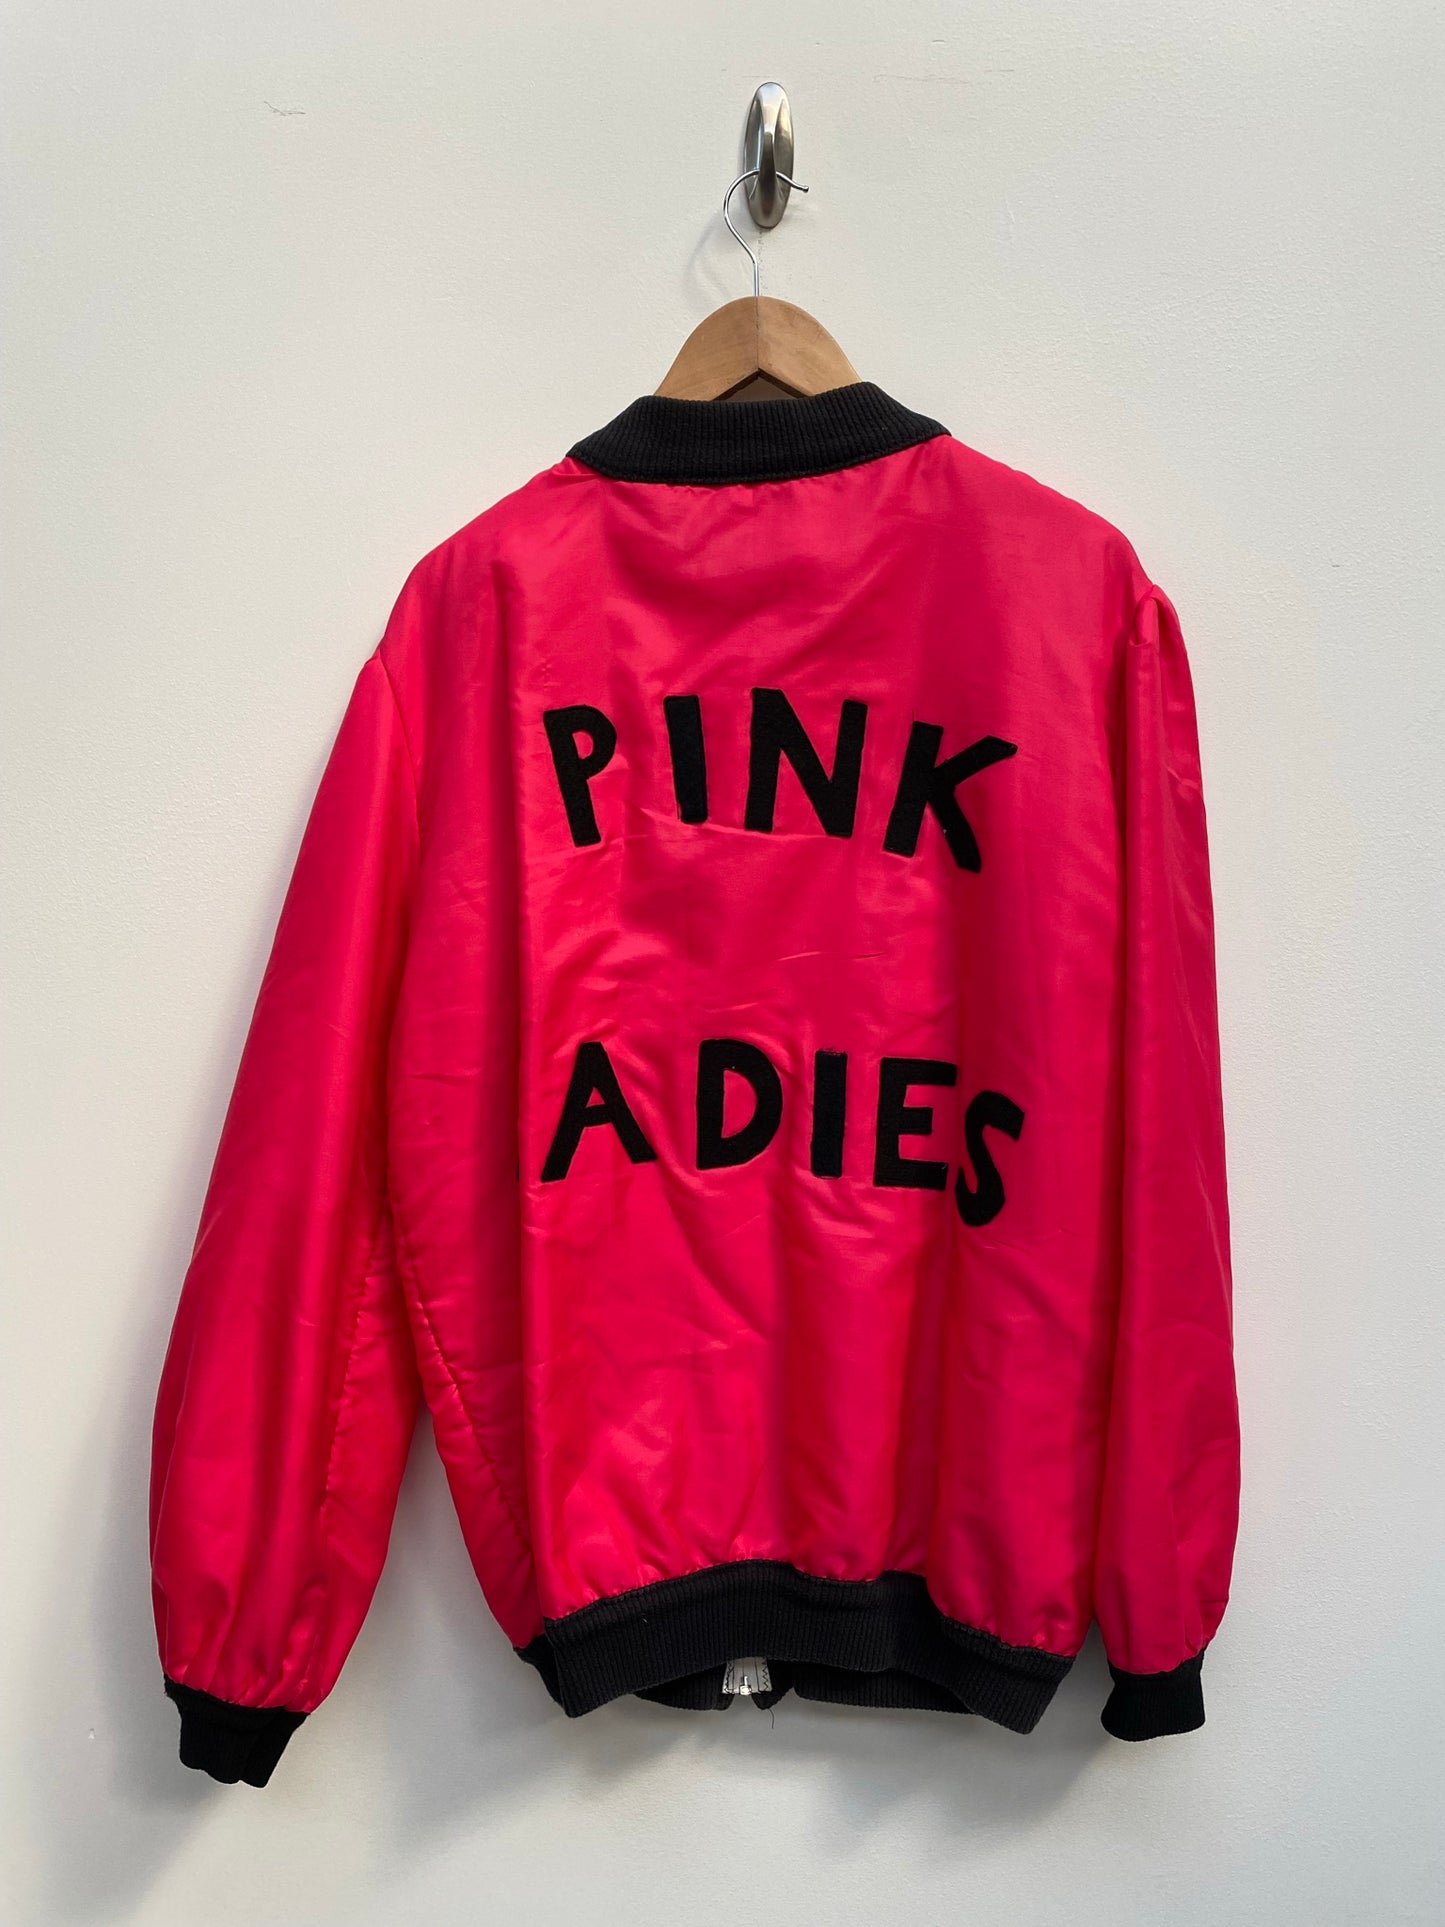 Pink Ladies Jacket Grease Size M/L - Ex Hire Fancy Dress Costume